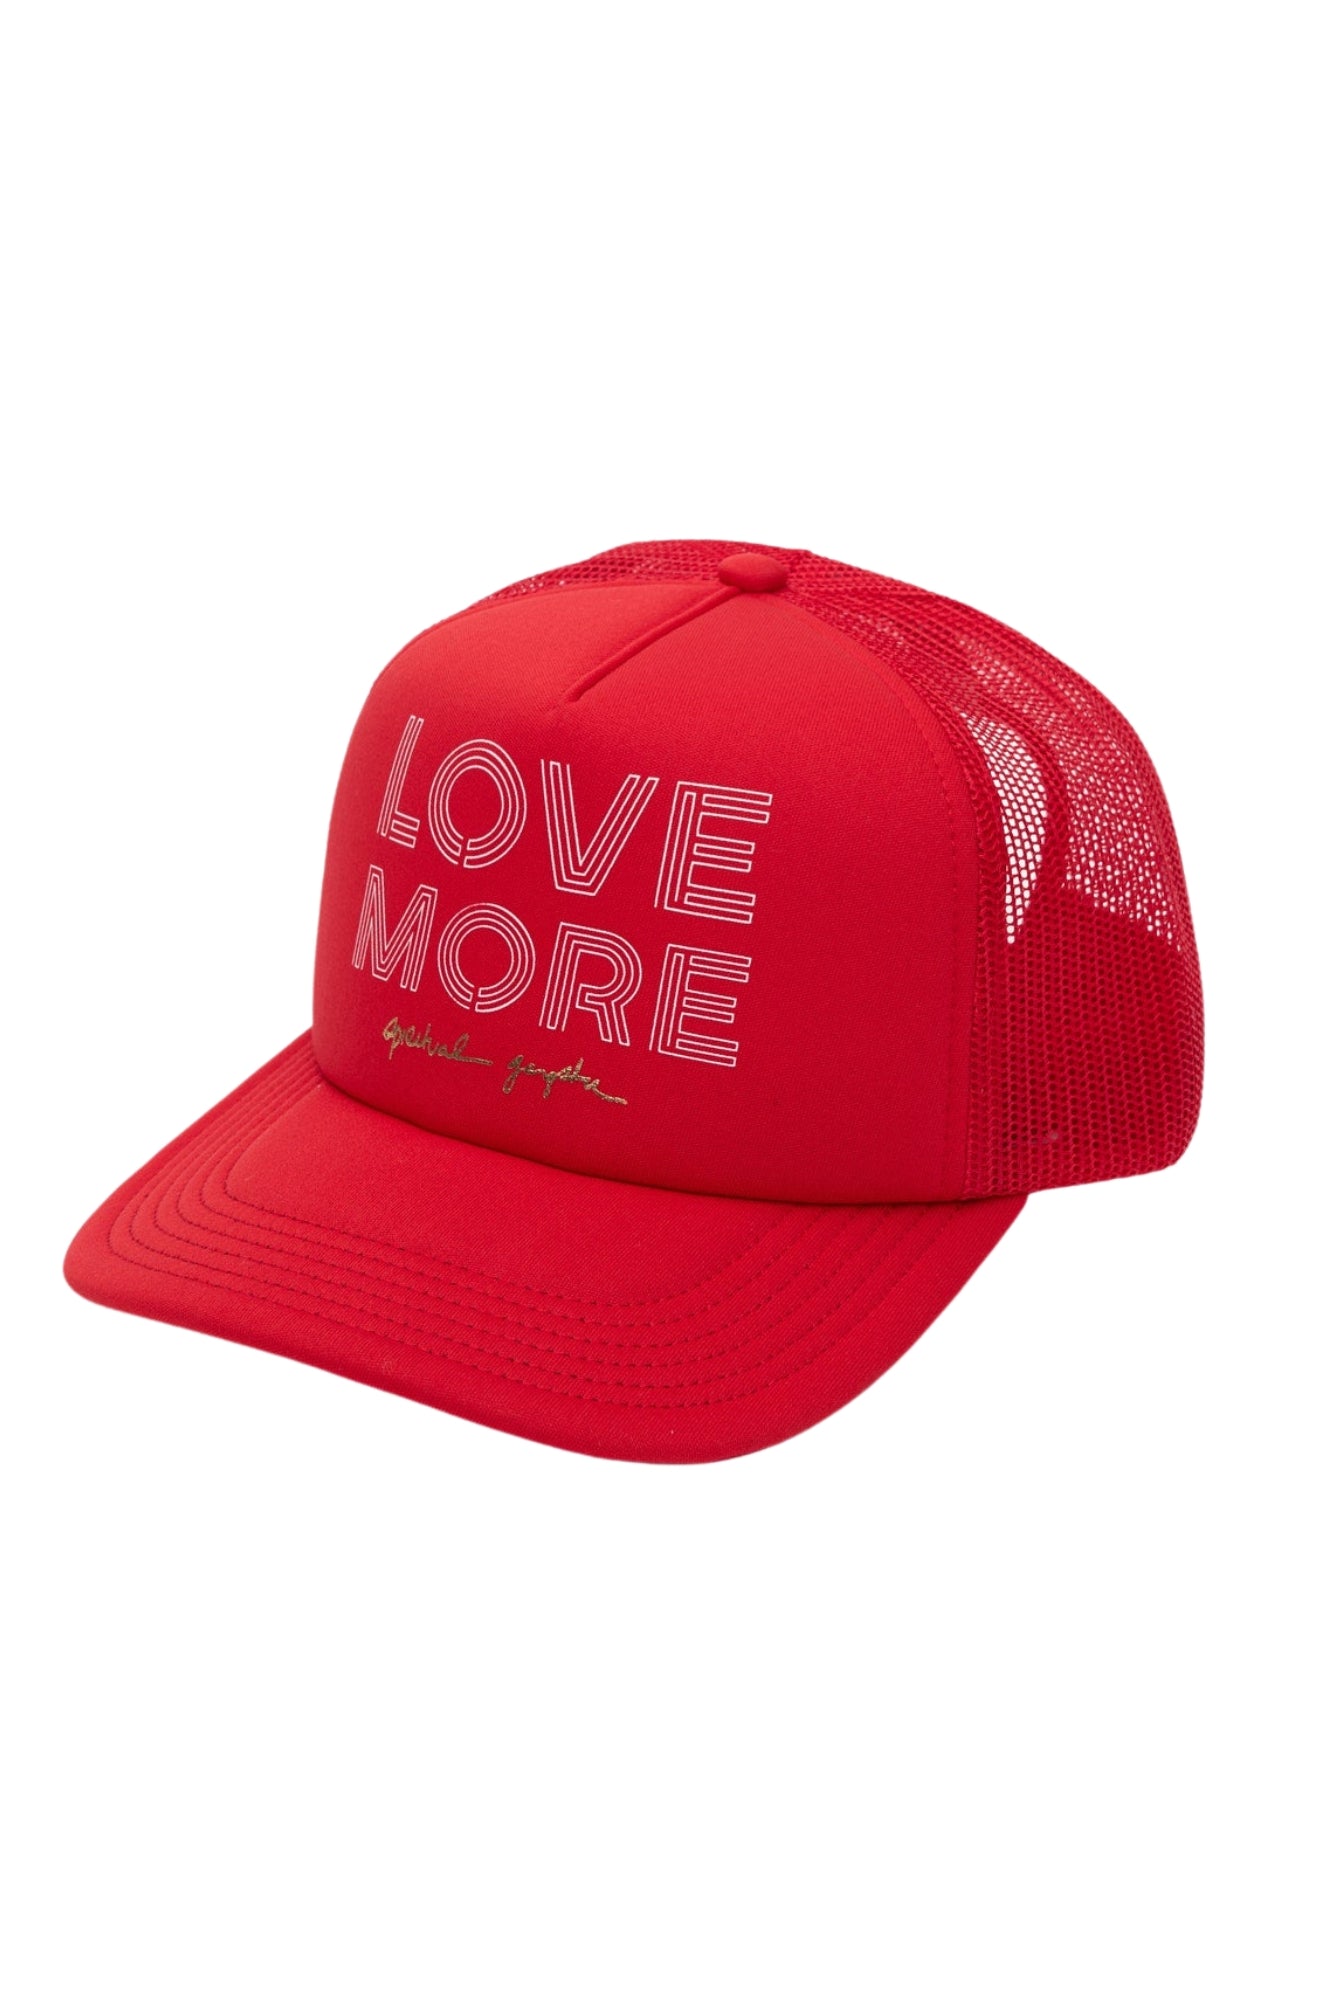     love-more-hat1